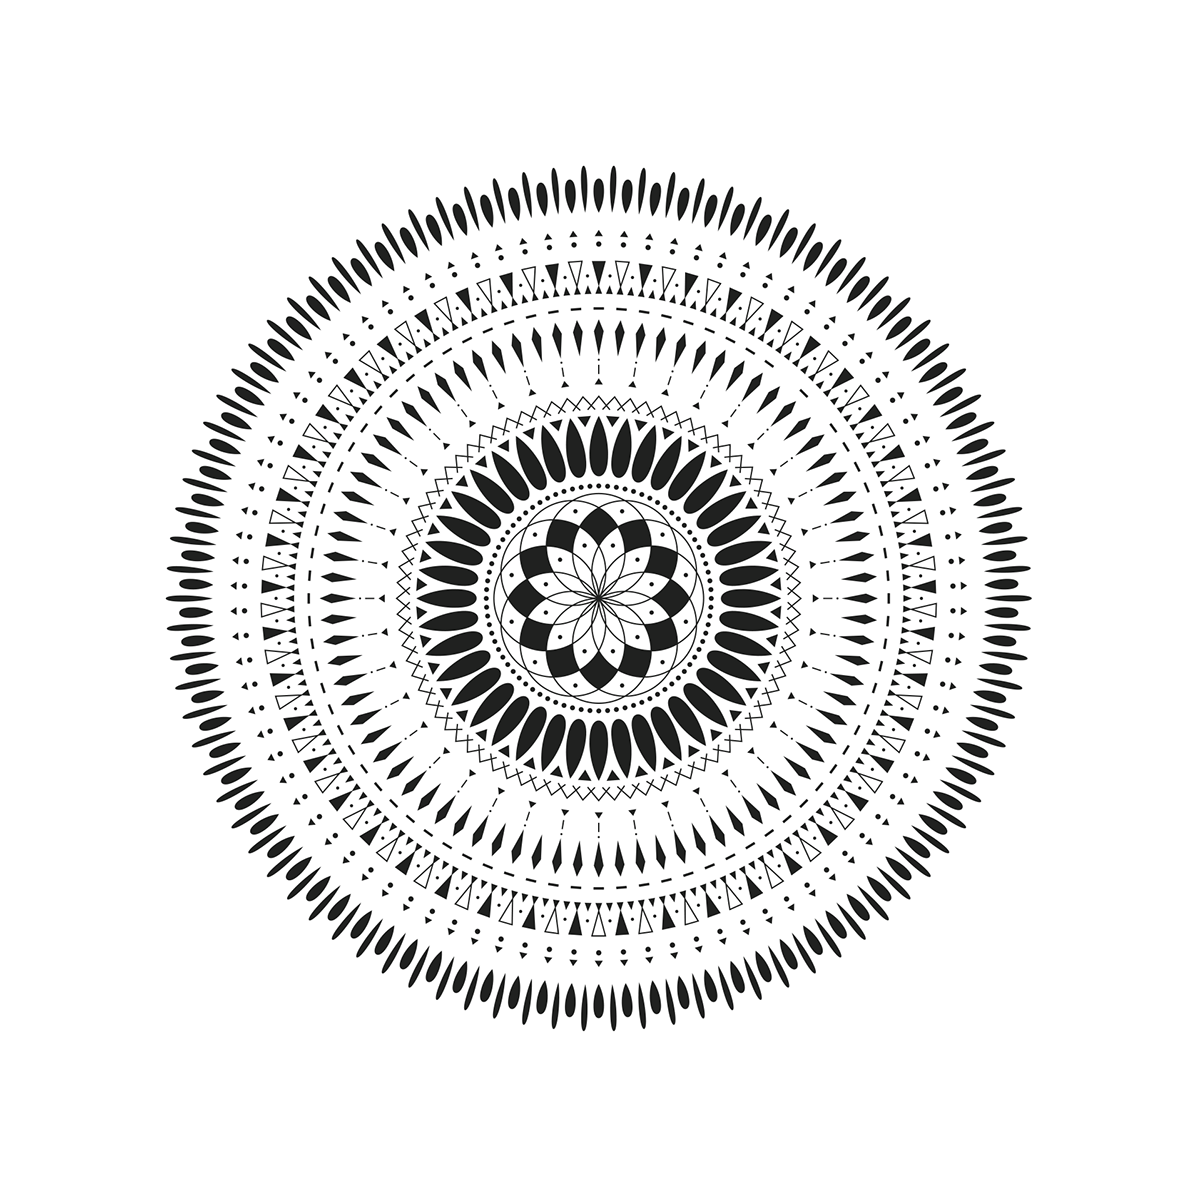 #patterns #patternart #art #DigitalArt Mandala Mandalas mandalastorytellers Icondesign icons characters storytelling   artwork sacredgeometry sacredart   circles